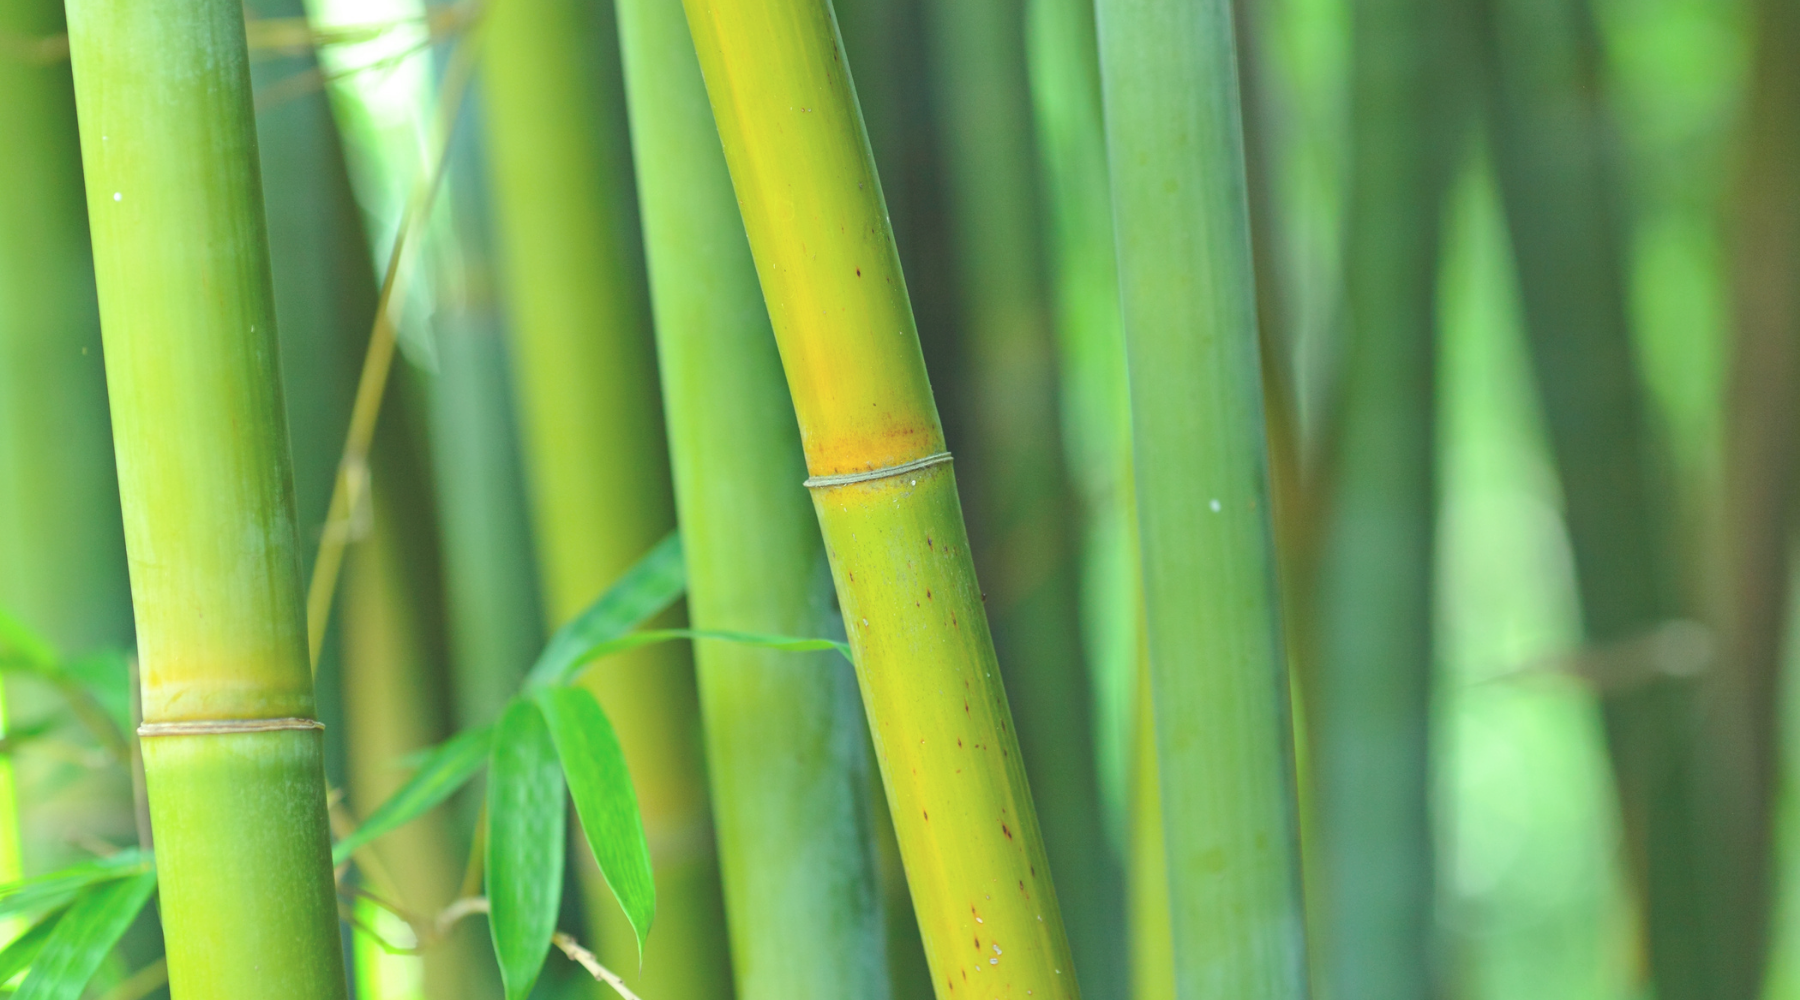 Reasons to Love Bamboo